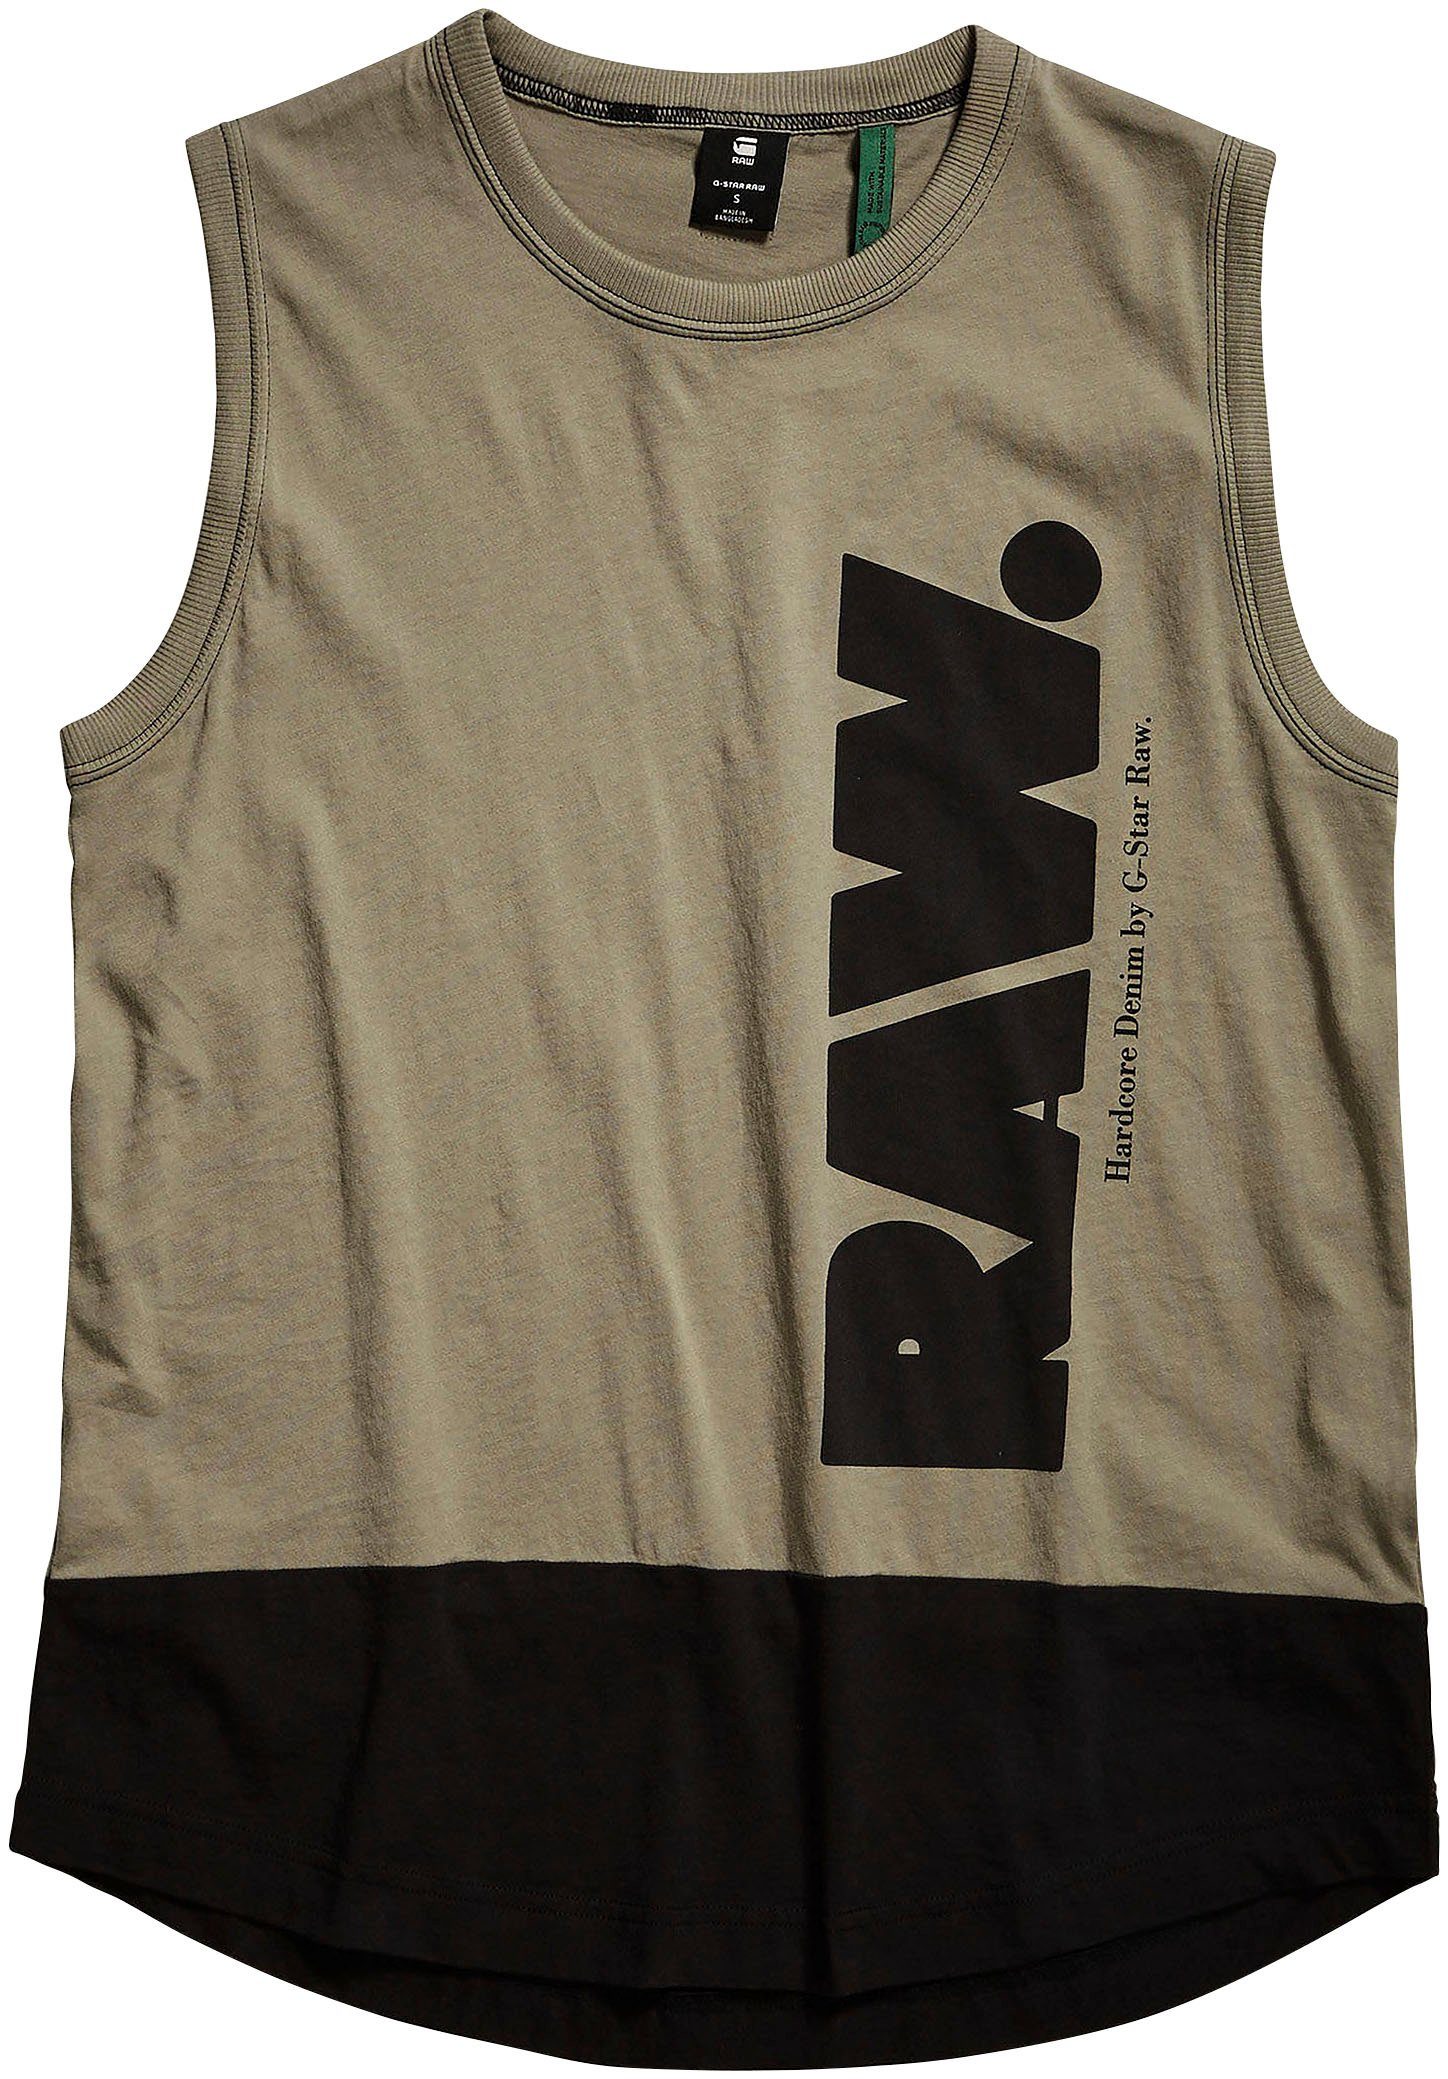 G-Star RAW shamrock/dk block to Logo mti color (oliv/schwarz) tank black Grafikdruck T-Shirt T-Shirt vorne Lash